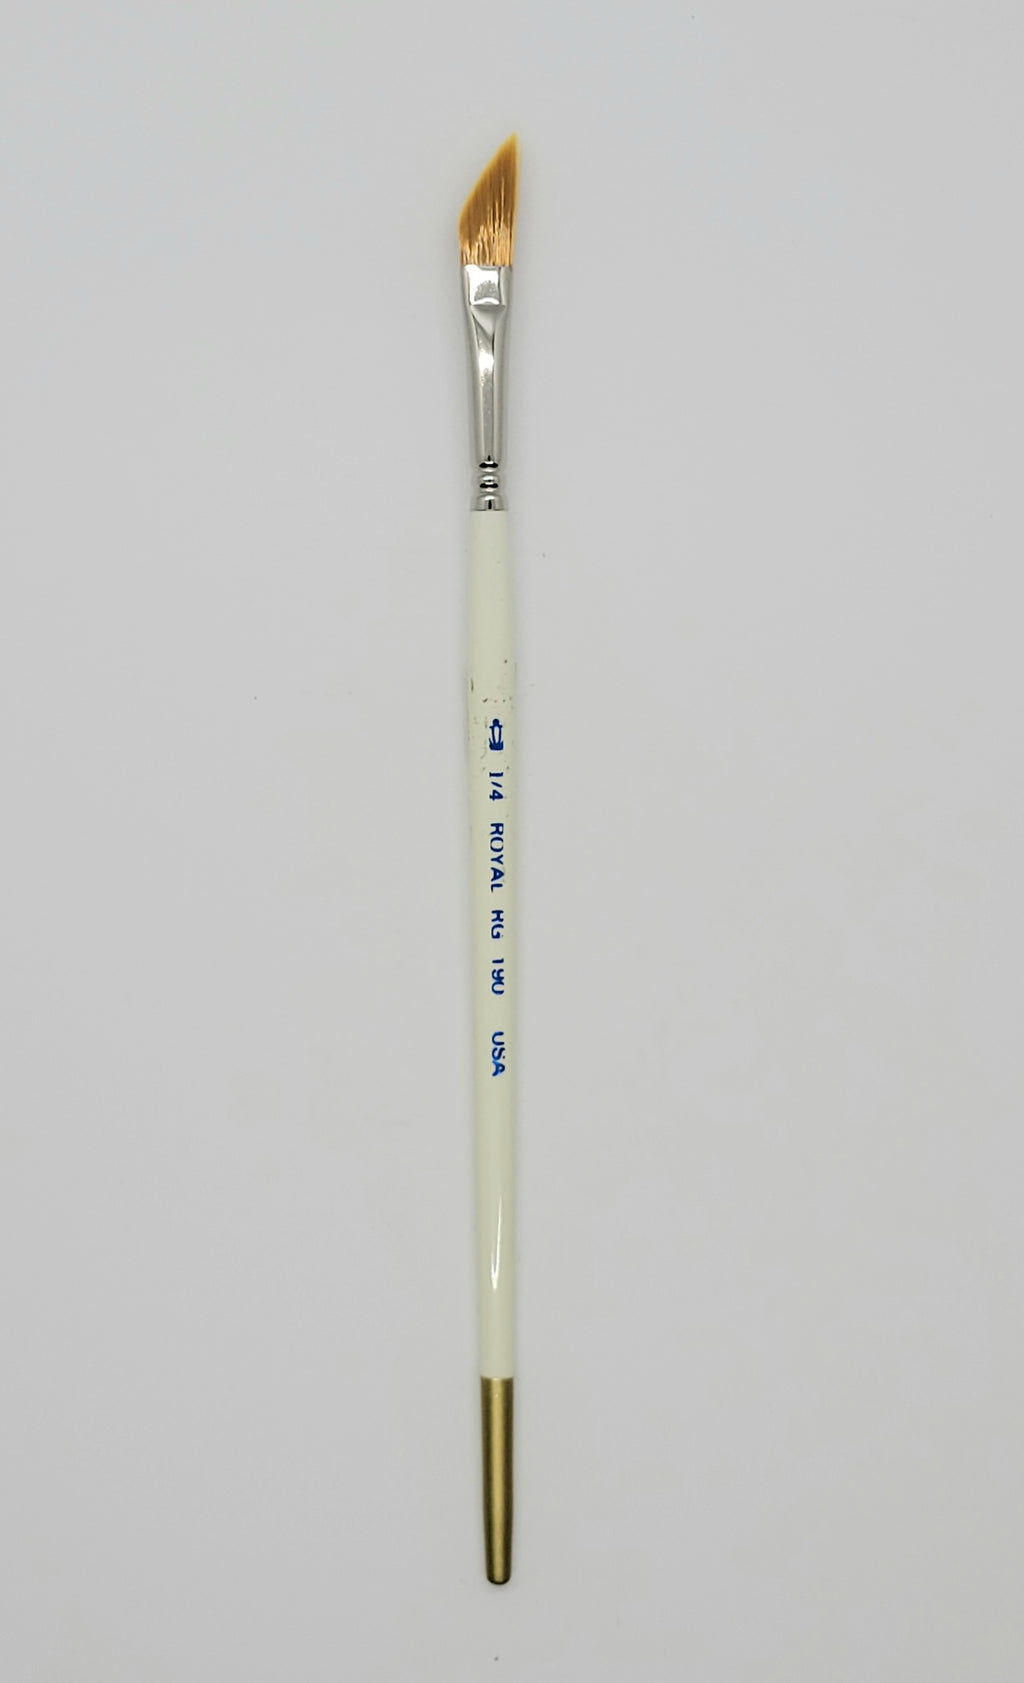 190 Dagger Striper, Royal Gold Brush by Royal & Langnickle - 1/4"